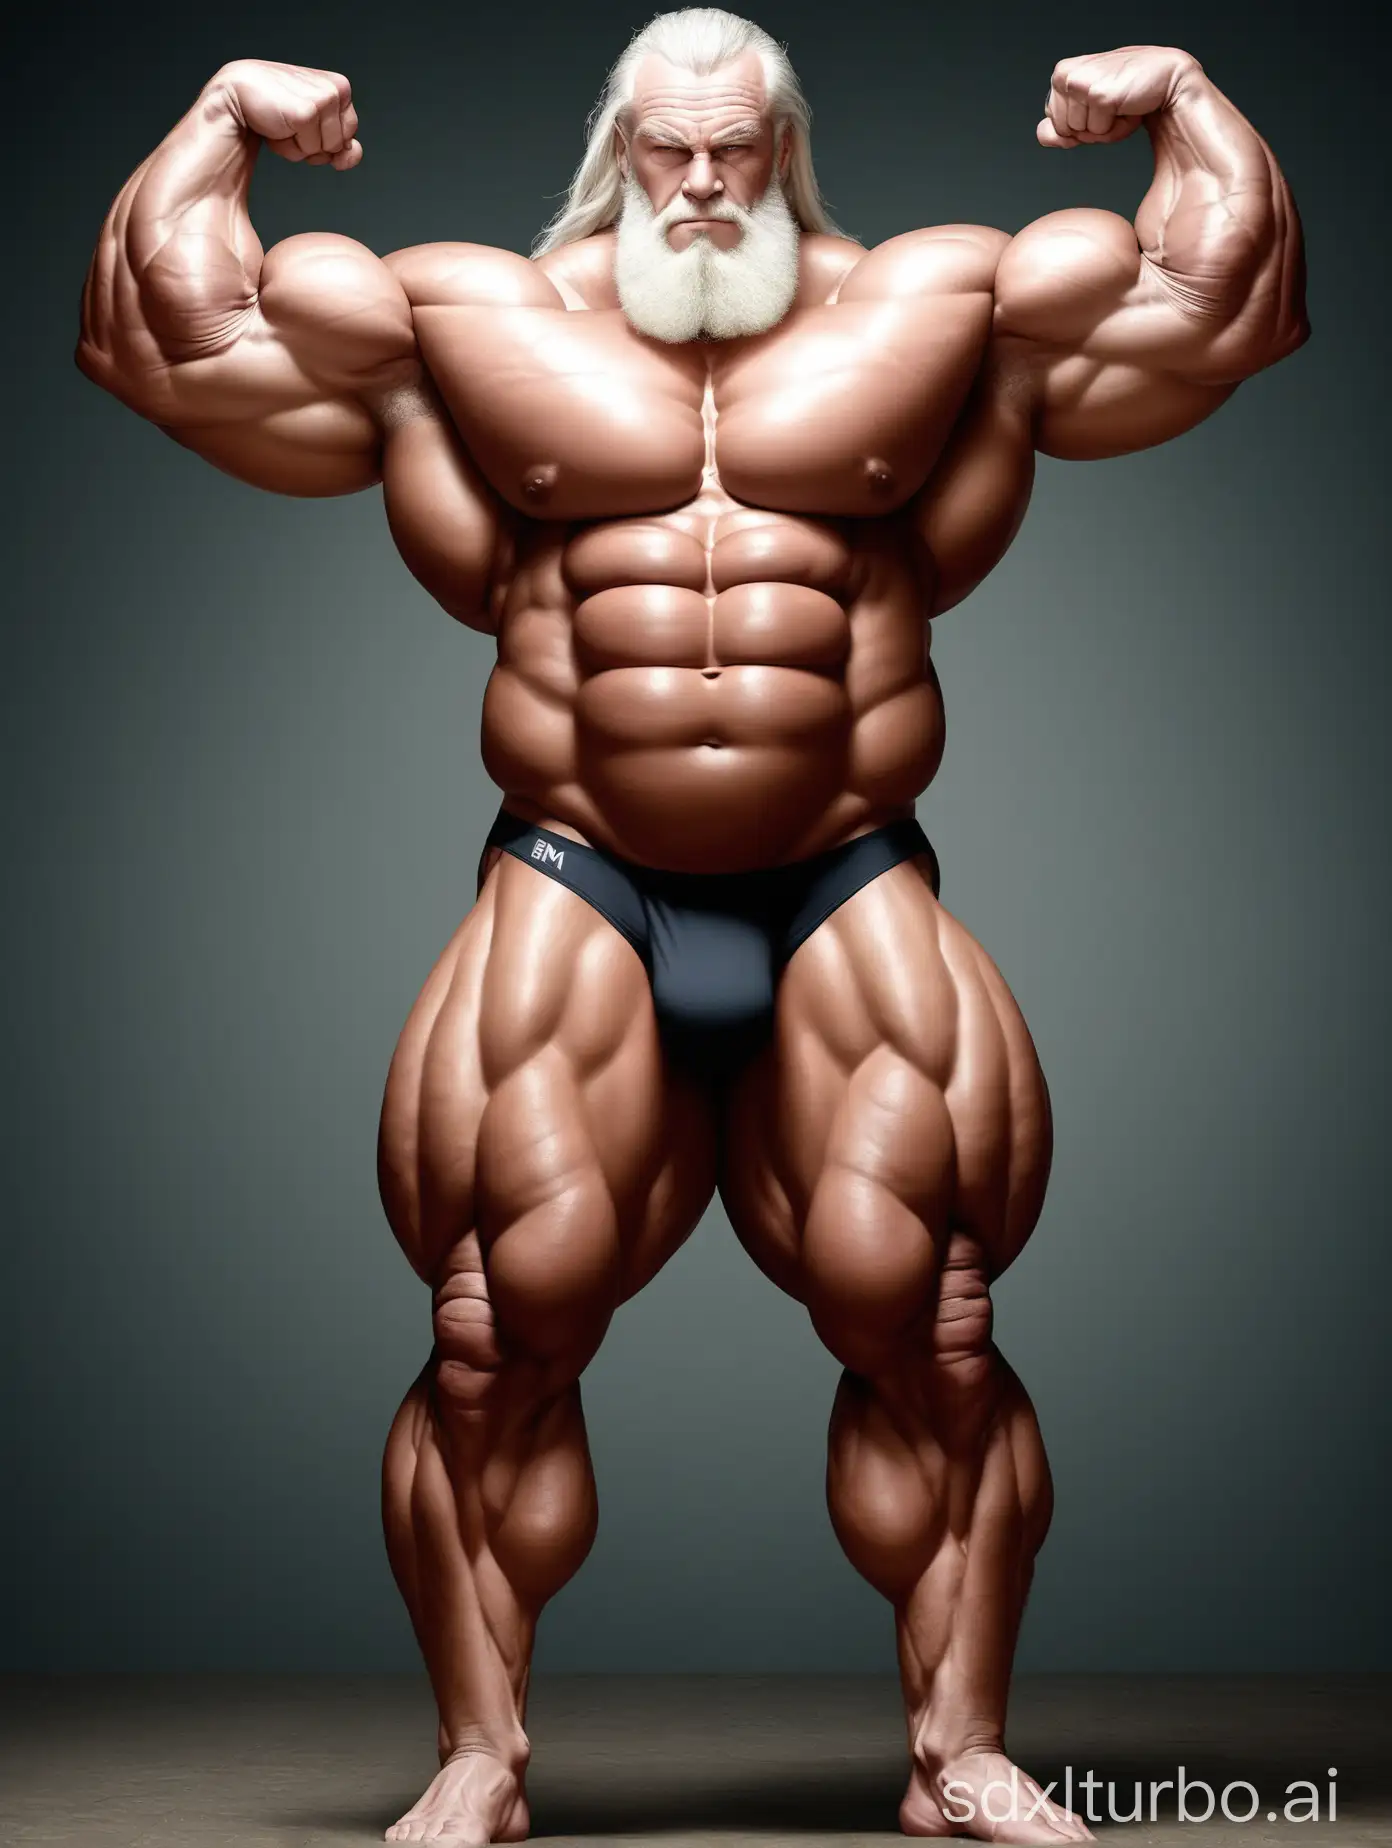 Massive-Muscle-Stud-Showing-Off-Huge-Biceps-in-Underwear